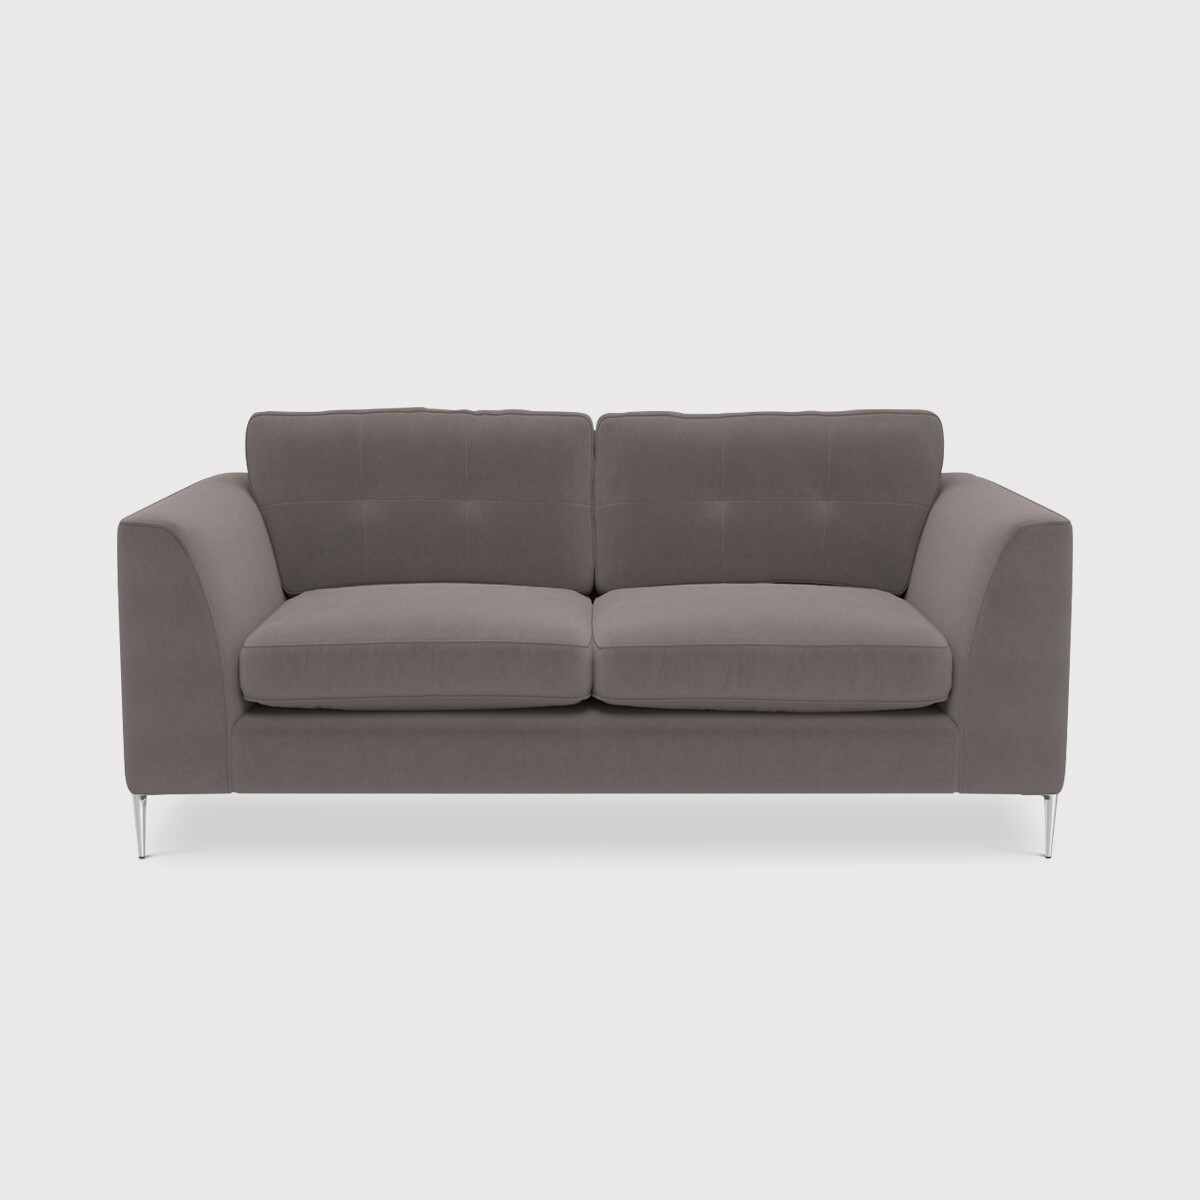 Conza Small Sofa, Grey Fabric | Barker & Stonehouse